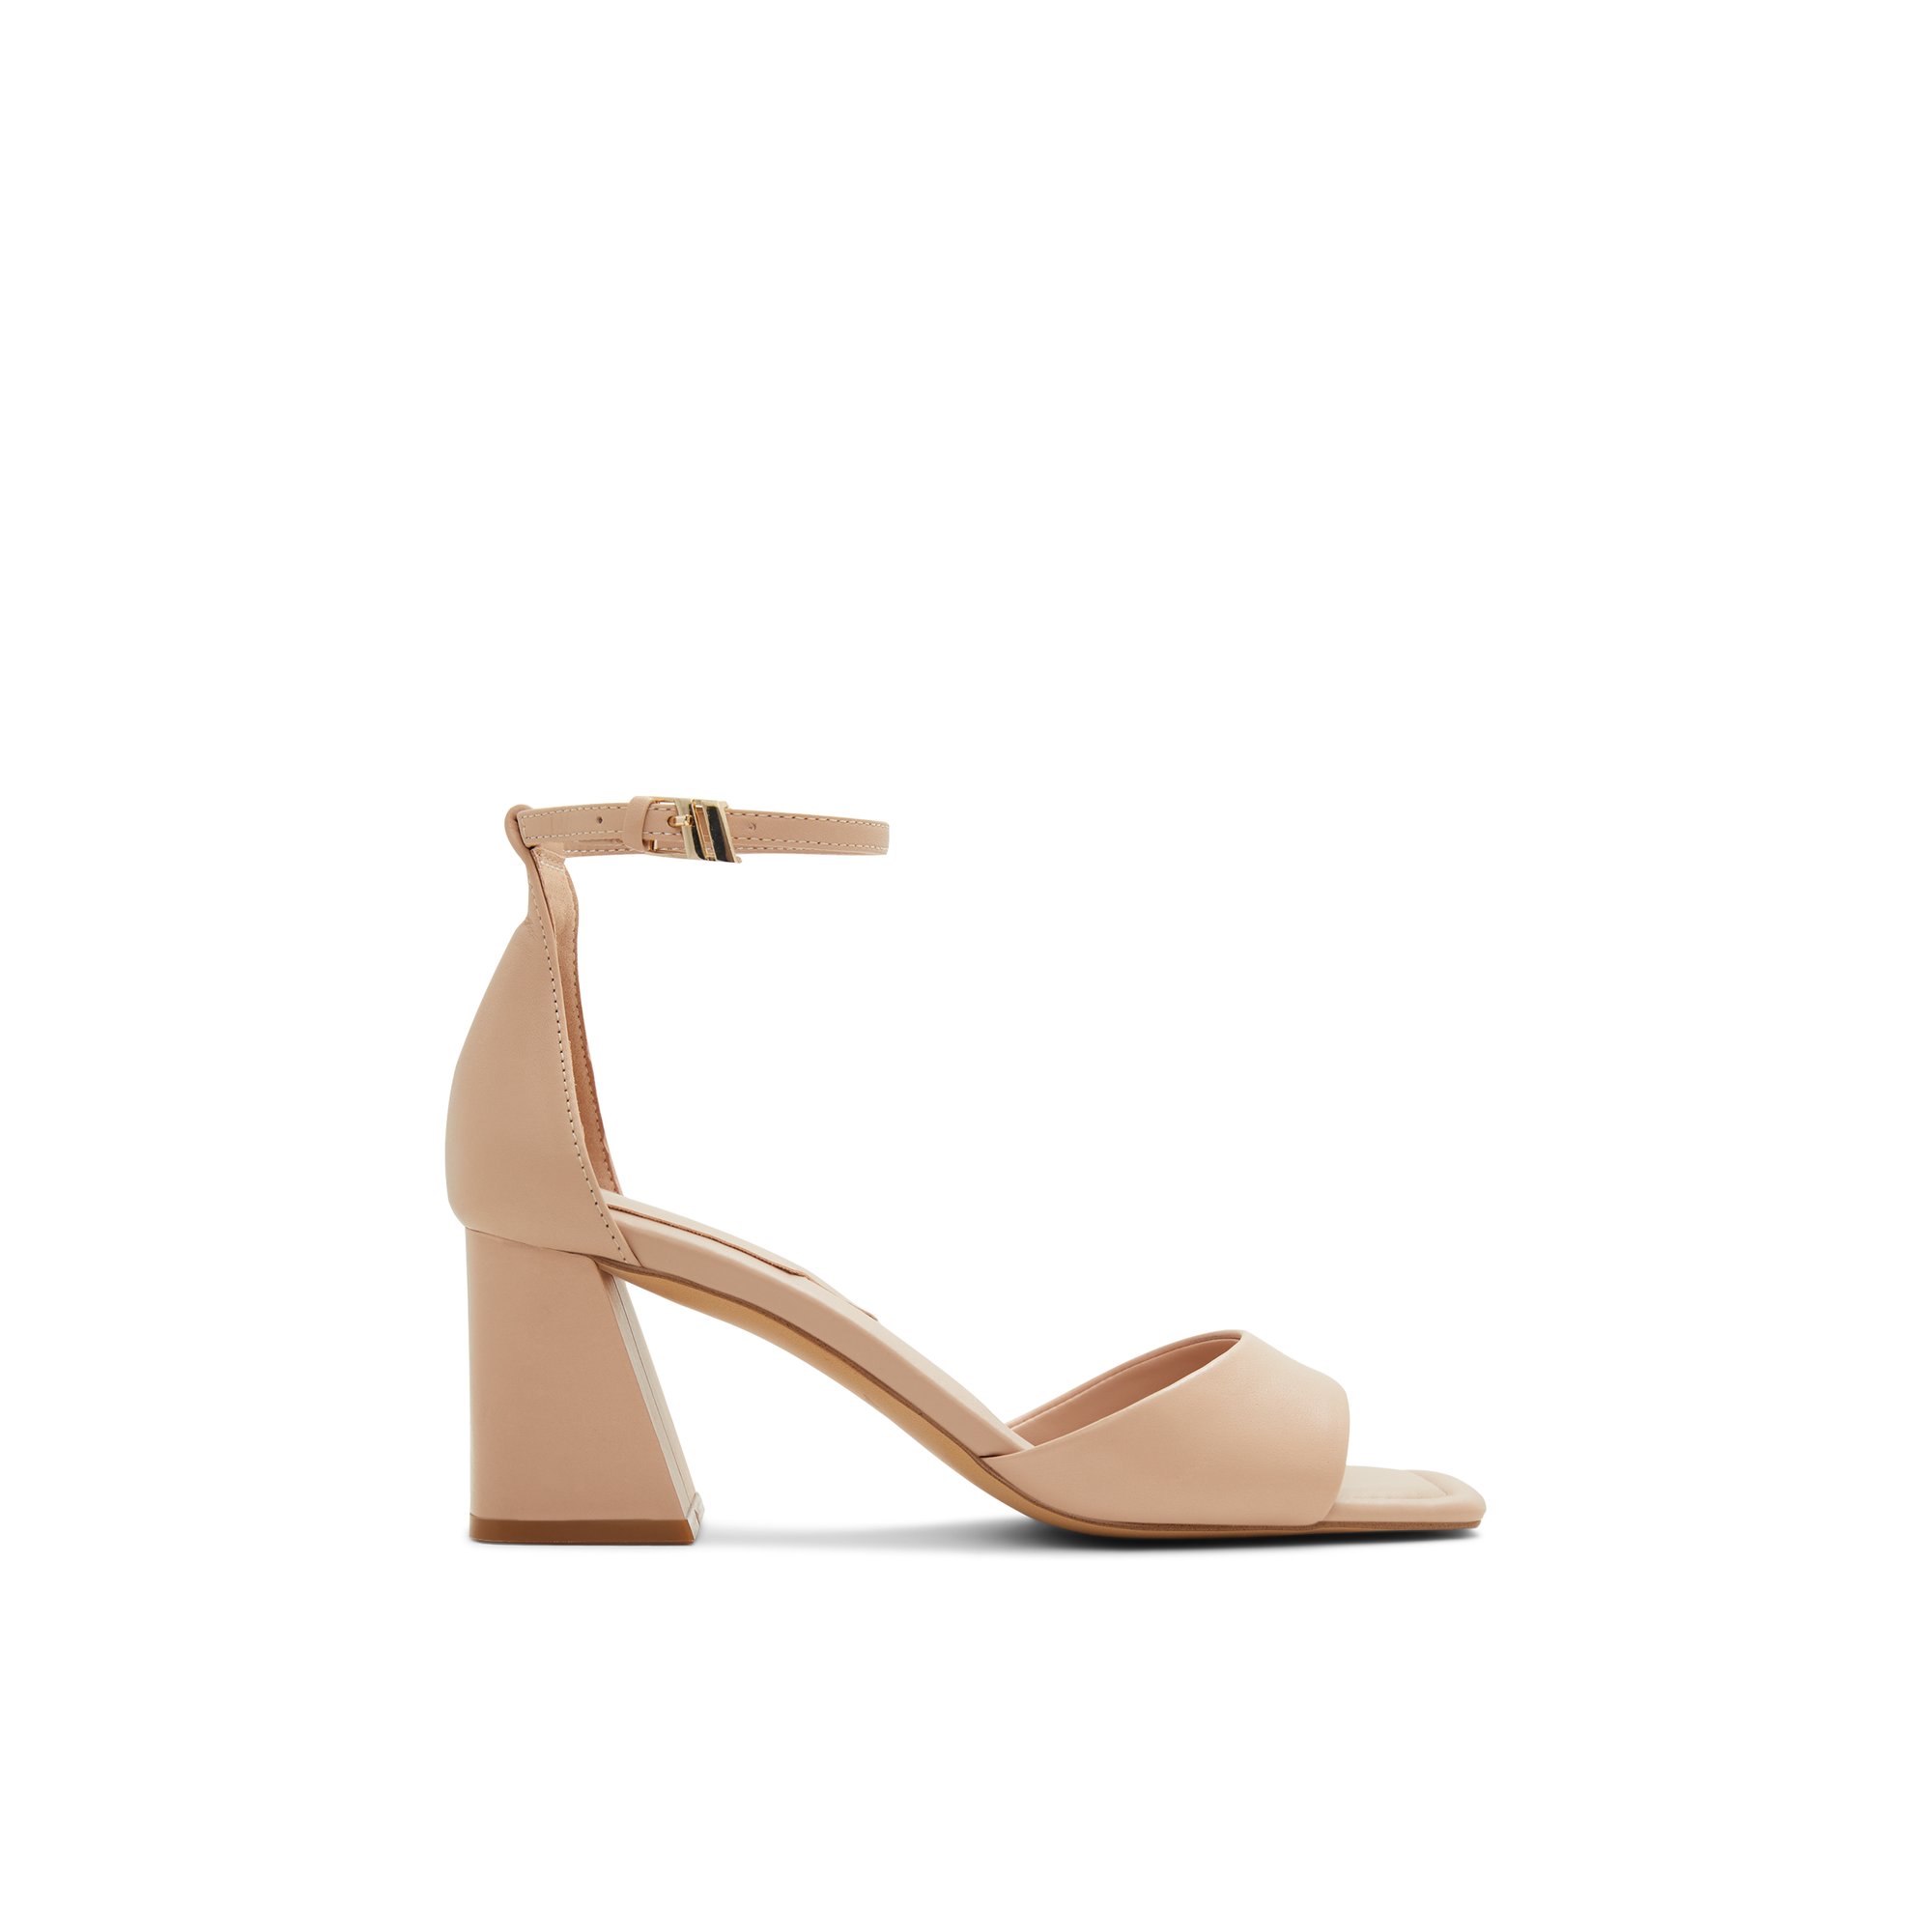 ALDO Safdie - Women's Heeled Sandal Sandals - Beige